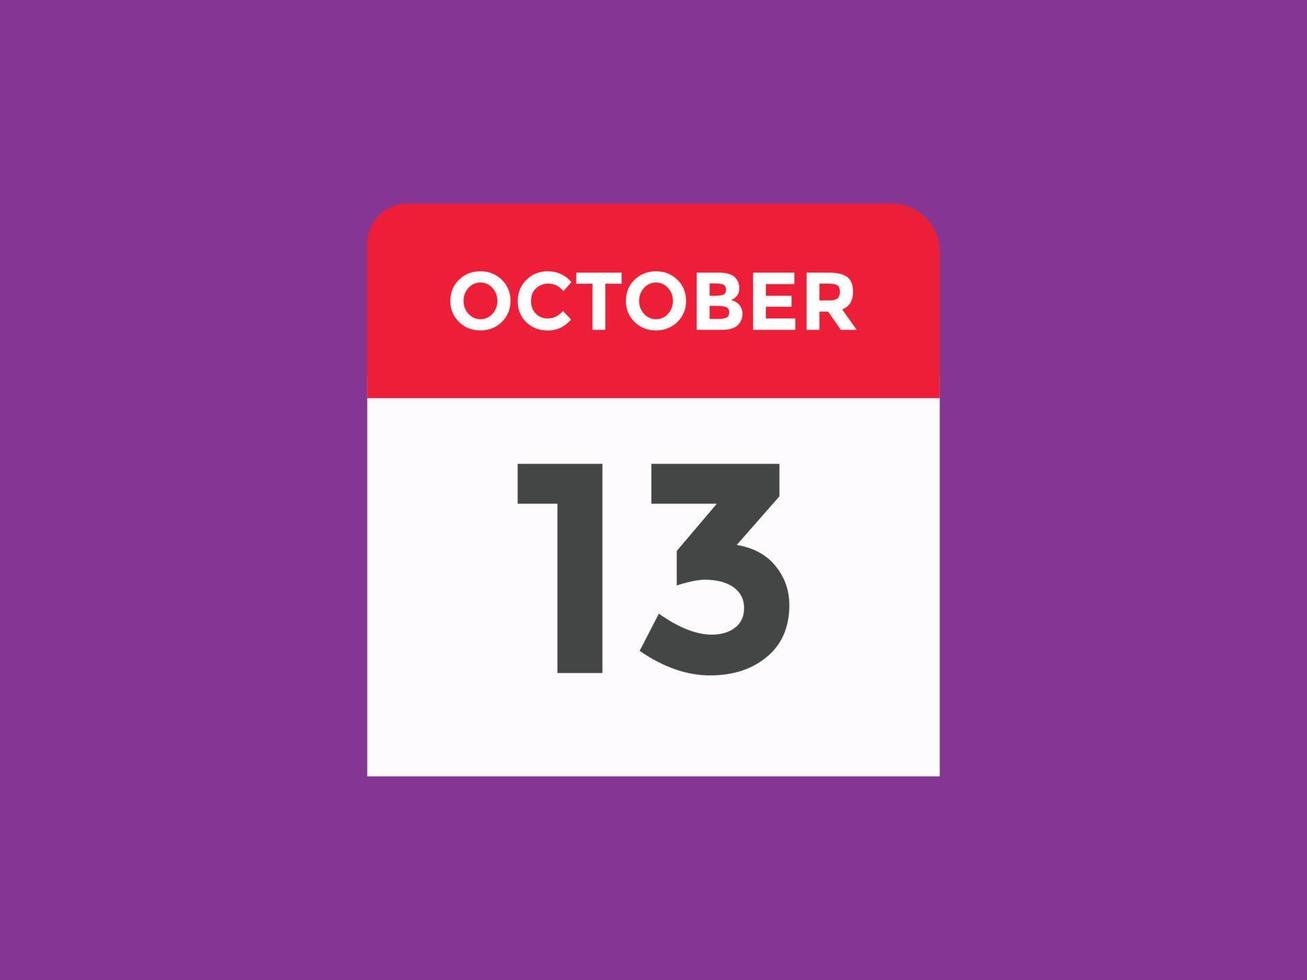 october 13 calendar reminder. 13th october daily calendar icon template. Calendar 13th october icon Design template. Vector illustration